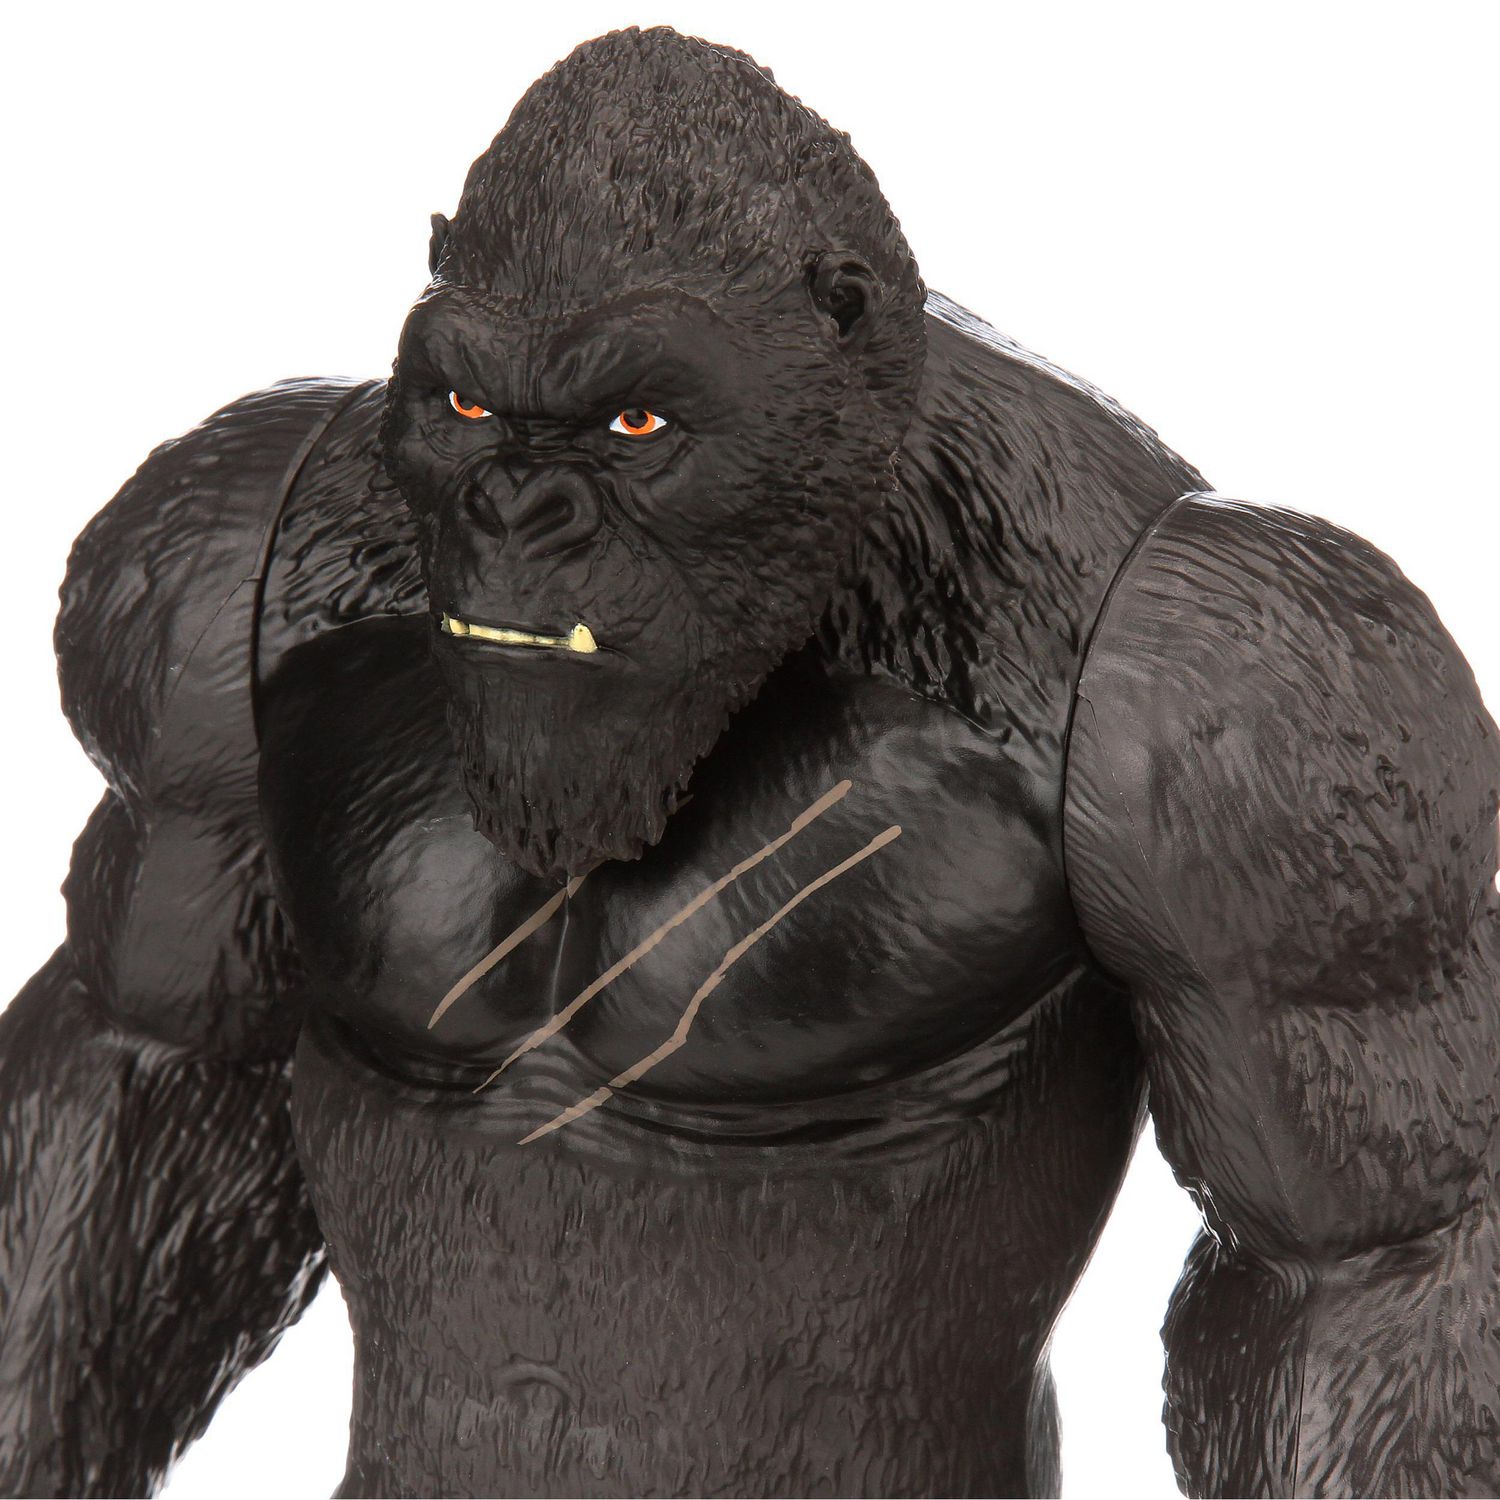 Monsterverse - Godzilla vs. Kong - 11